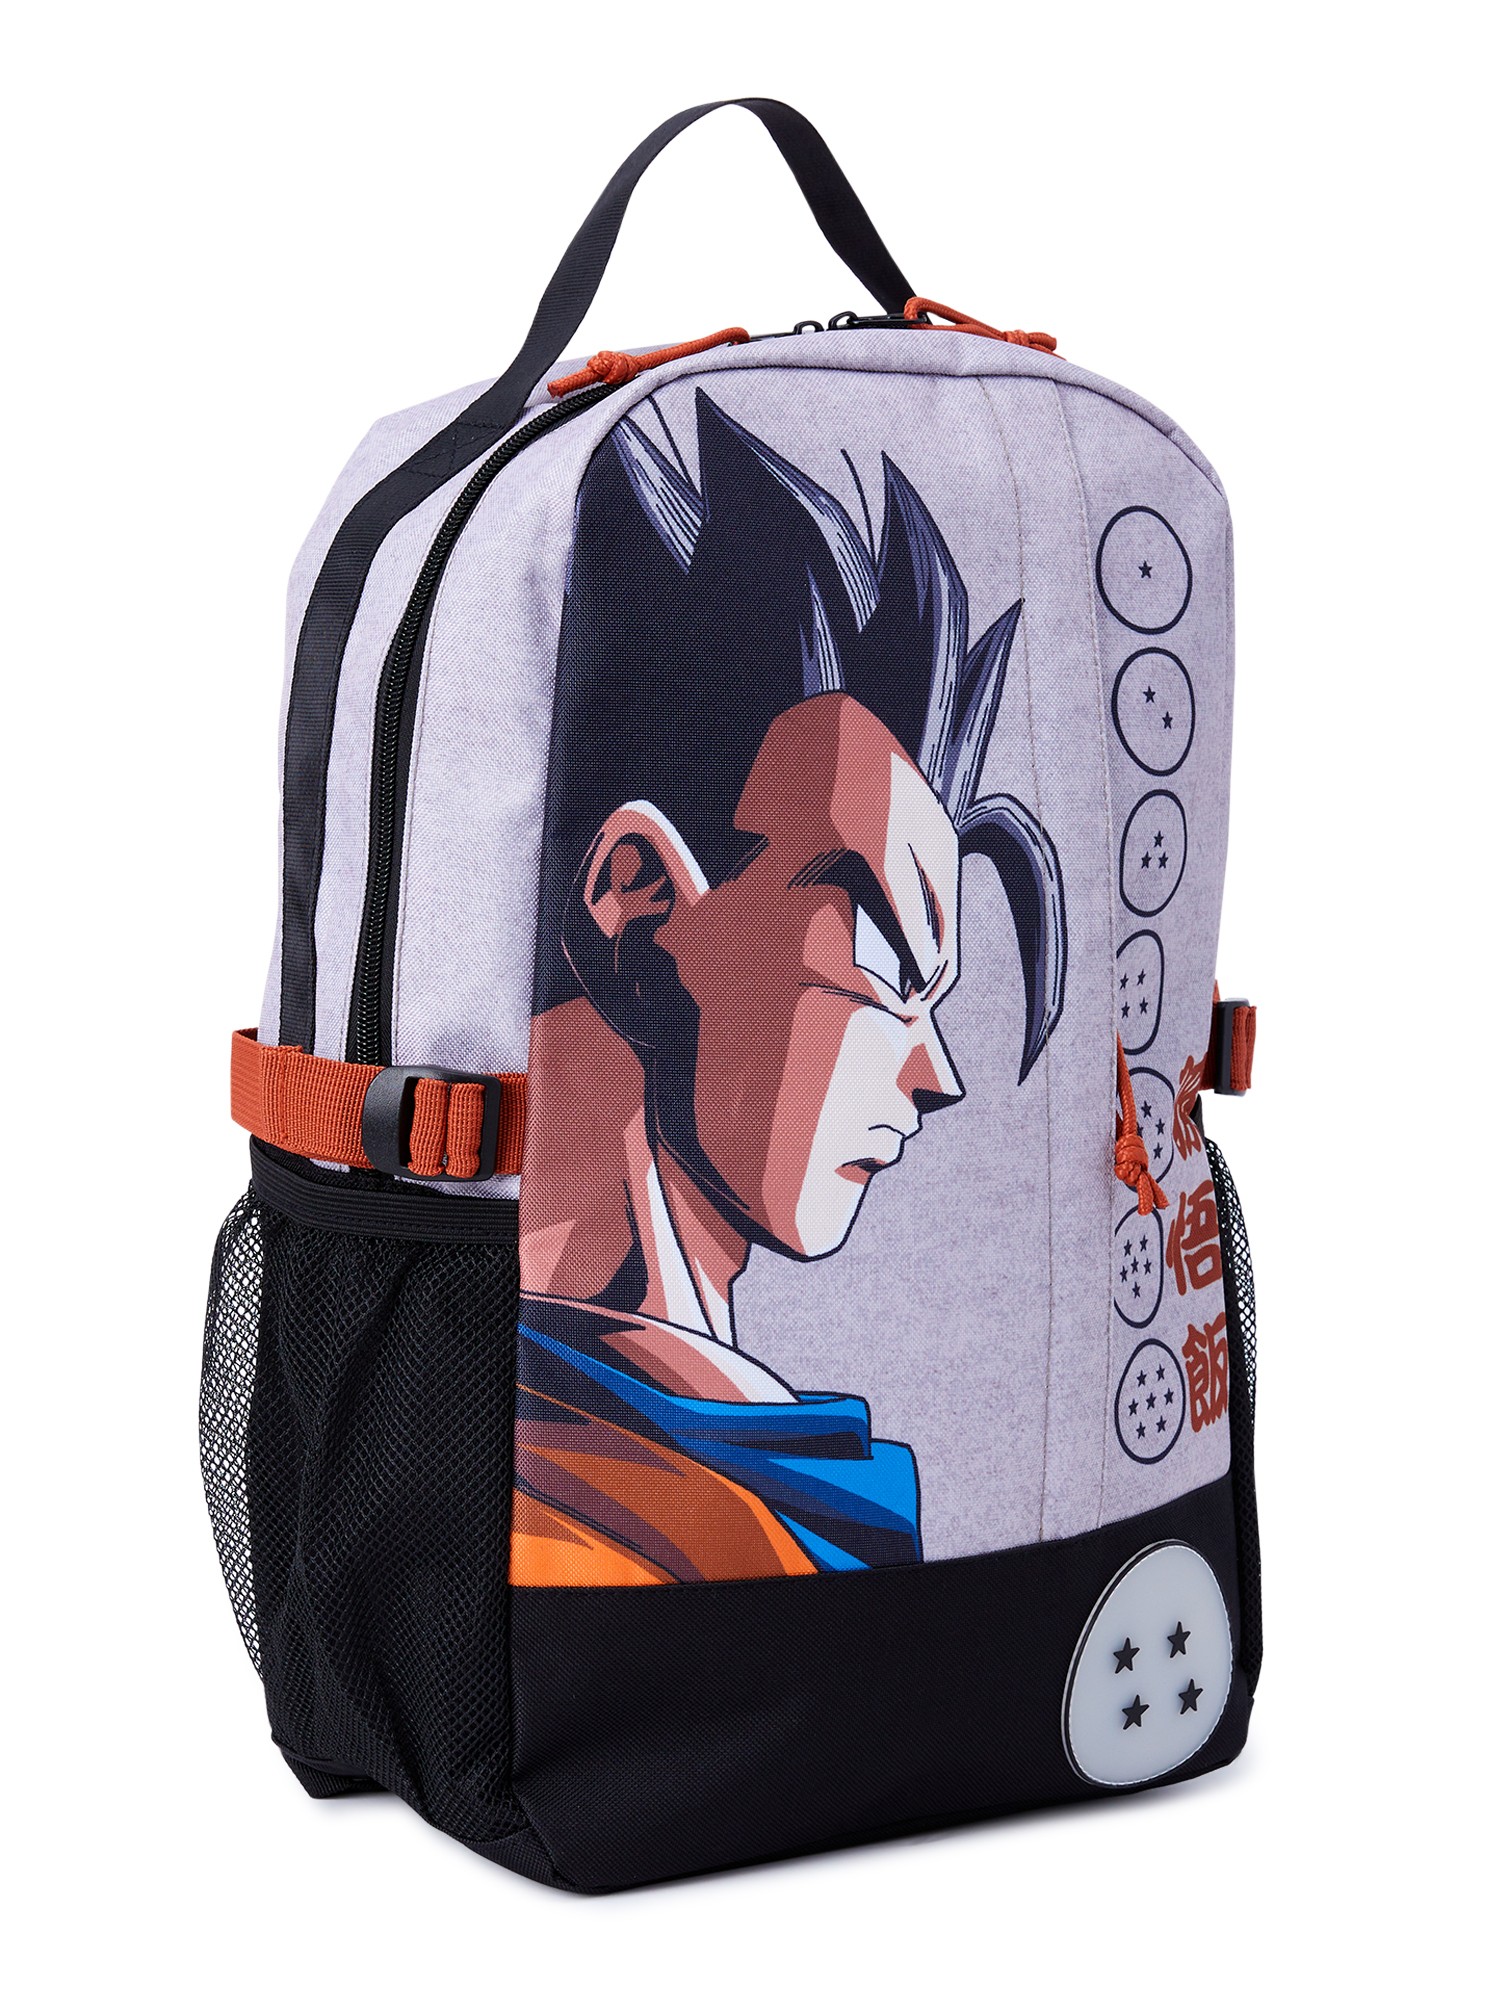 Dragon Ball Z Gohan Unisex 18" Laptop Backpack, Grey Black - image 2 of 5